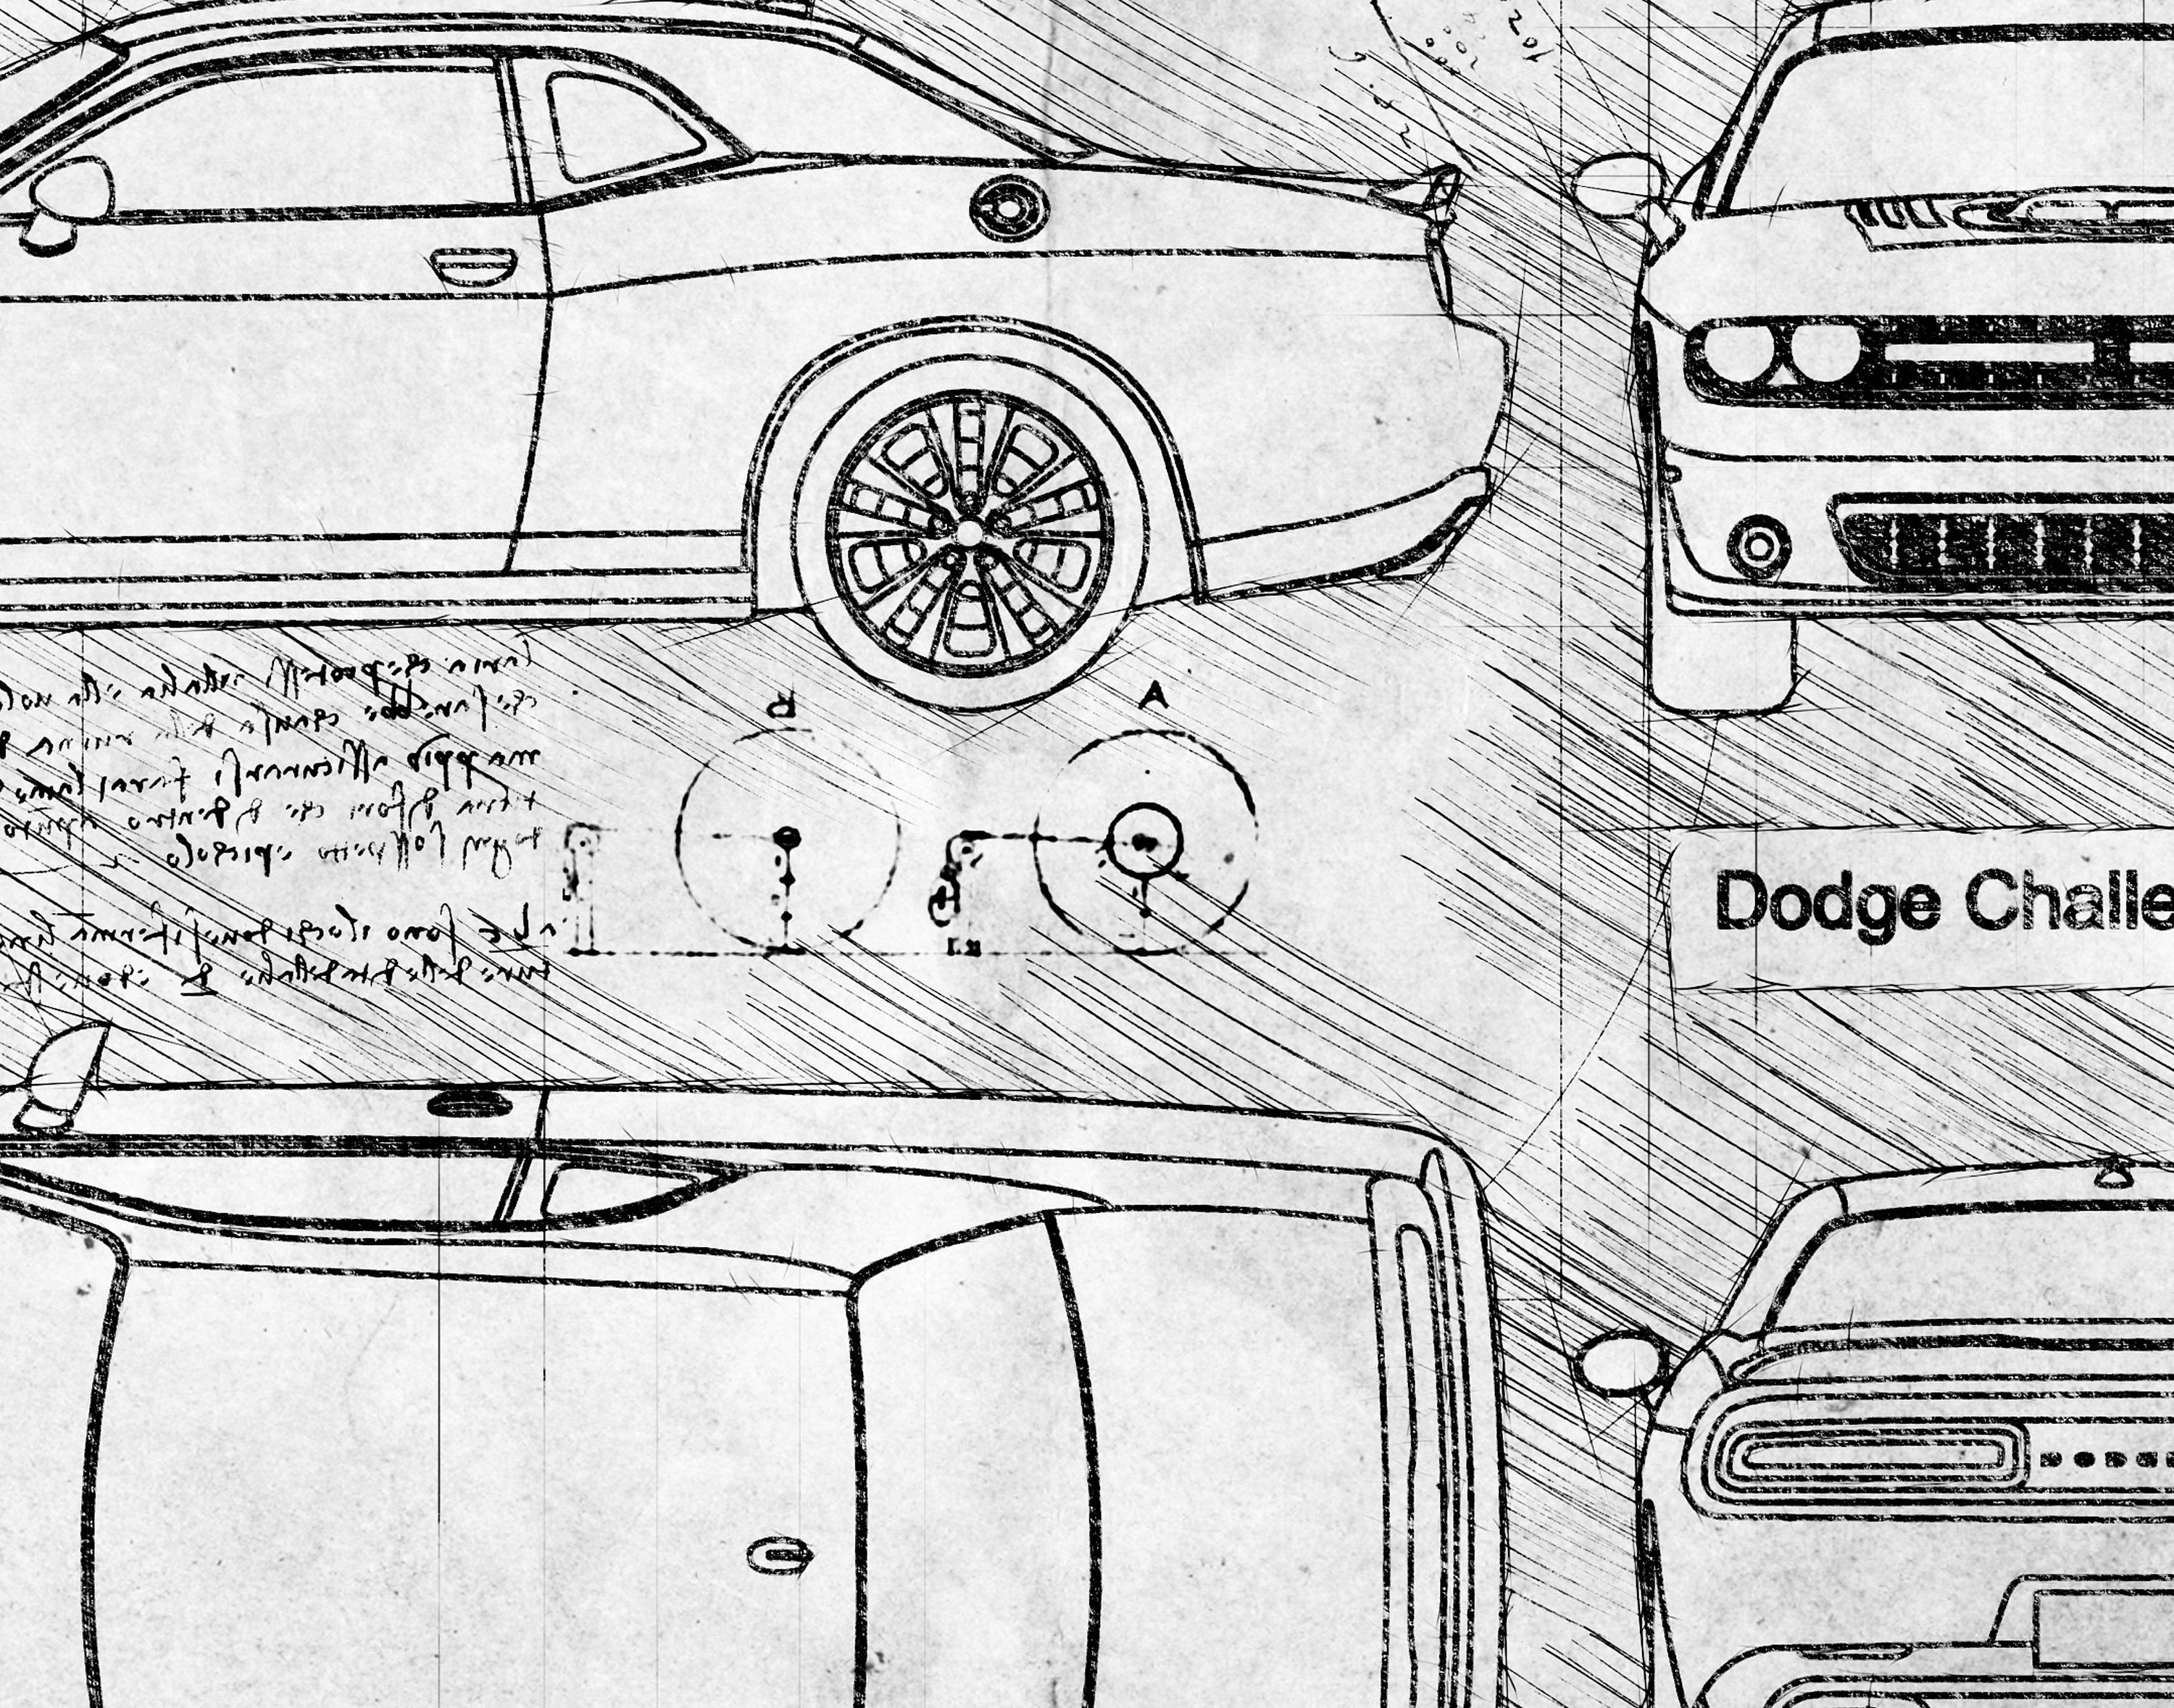 New Dodge Challenger drawing  Car drawings Car art Car cartoon